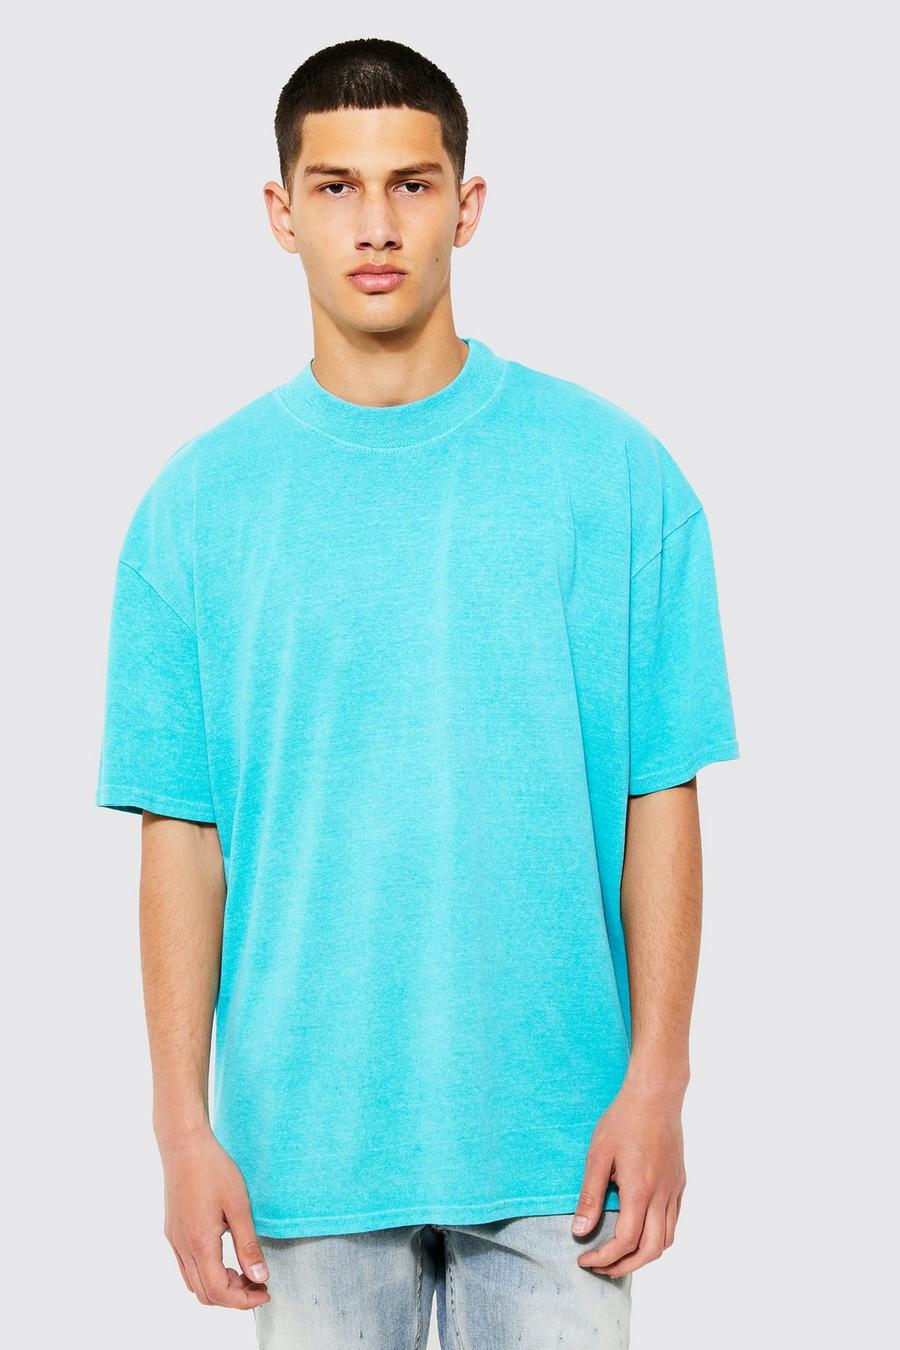 Aqua blue Oversized Overdye T-shirt